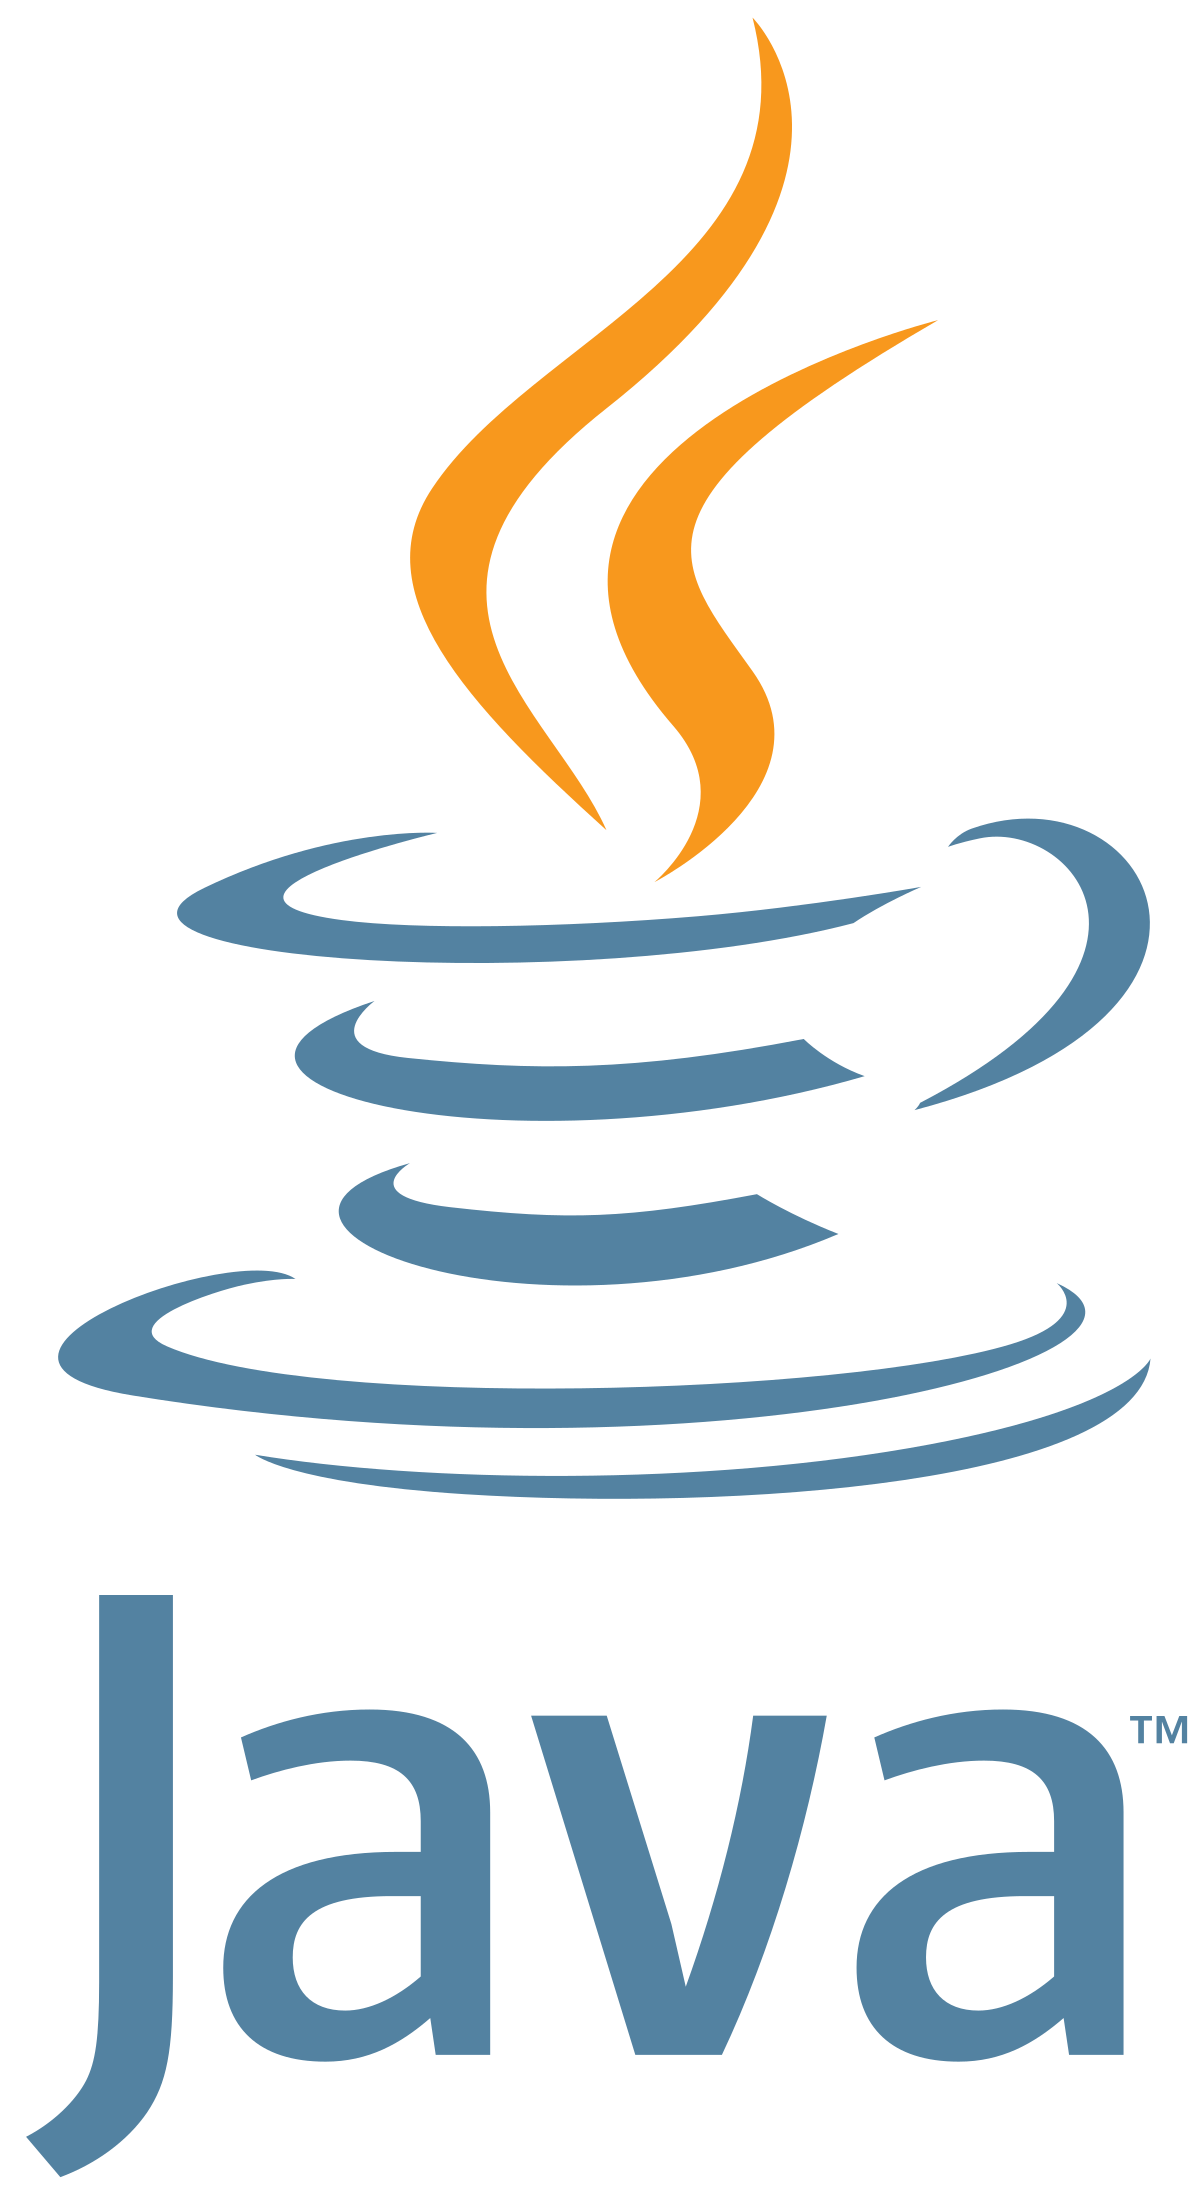 Old Java Logo - Java (programming language)